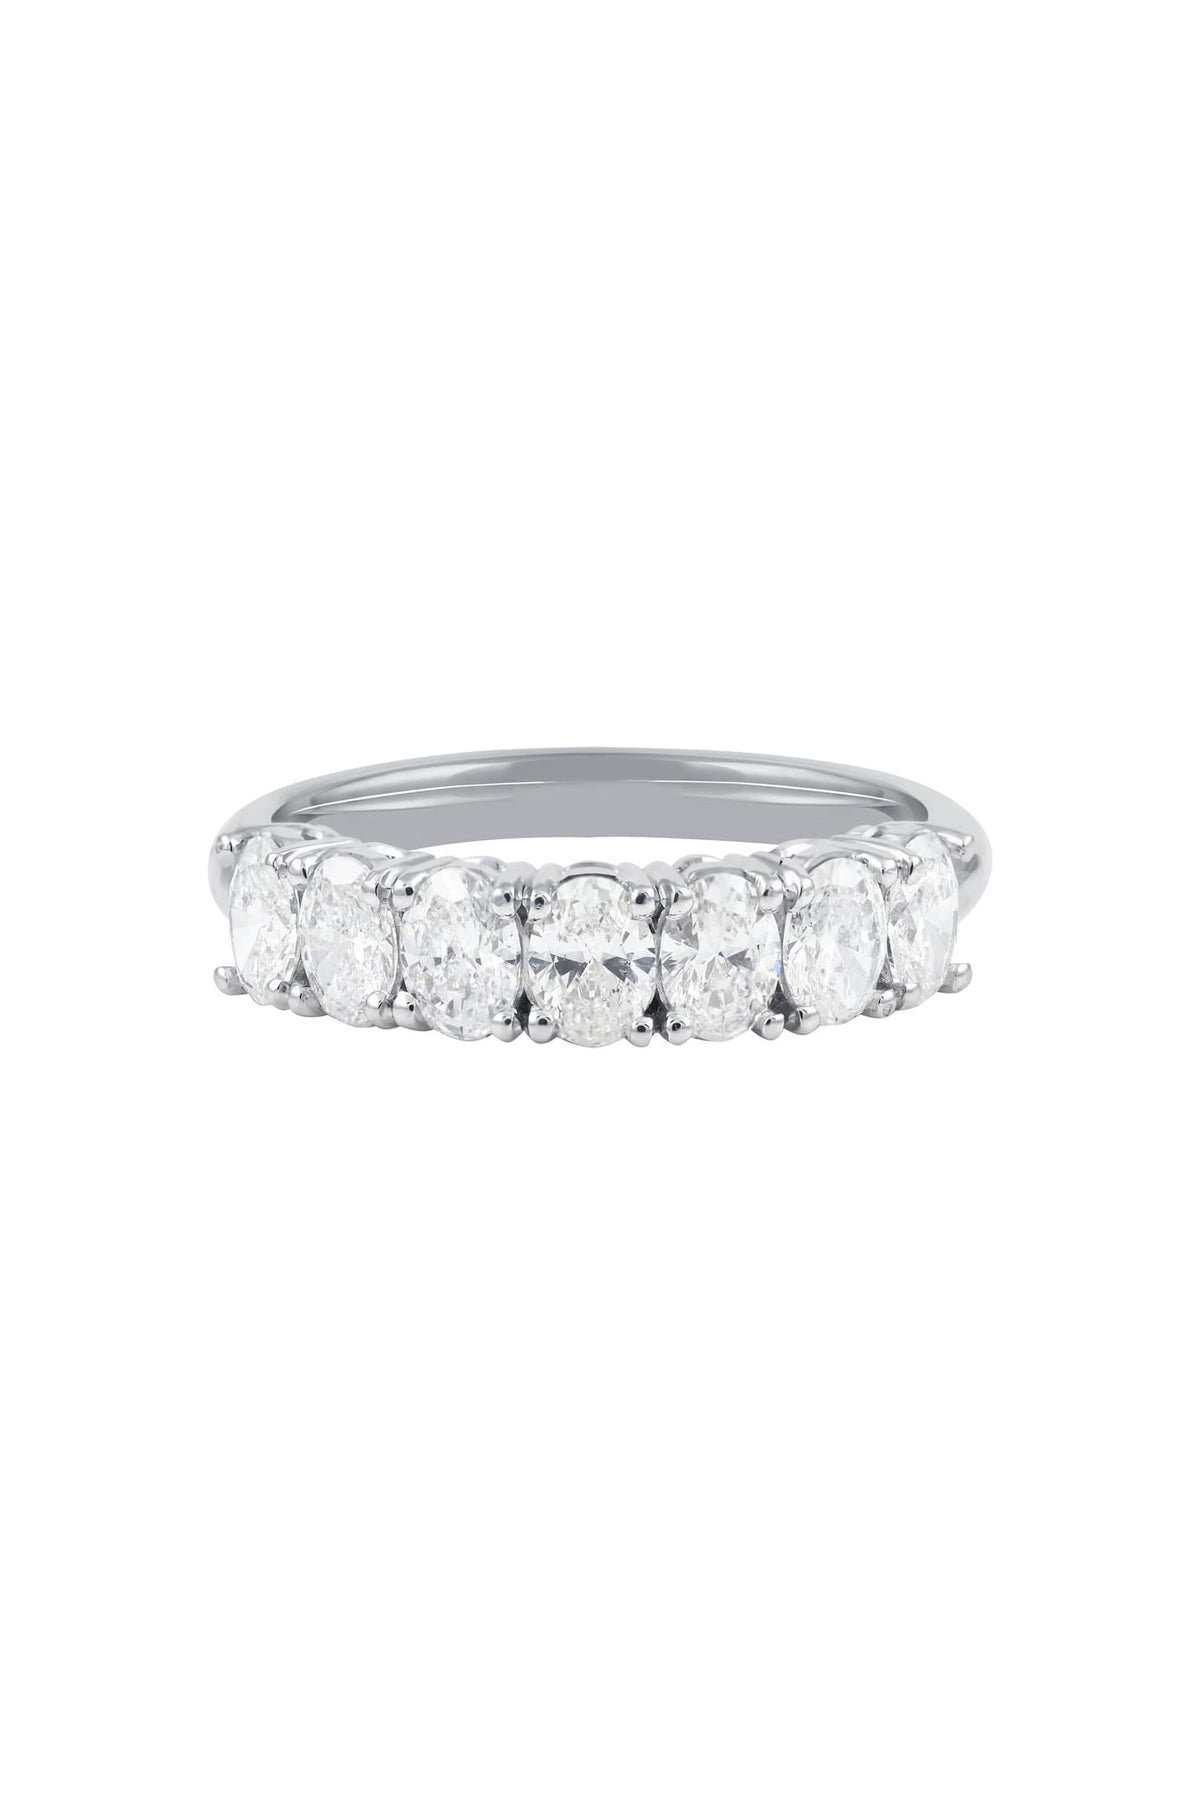 1.17ct Platinum Oval Diamond Set Ring available at LeGassick Diamonds and Jewellery Gold Coast, Australia.